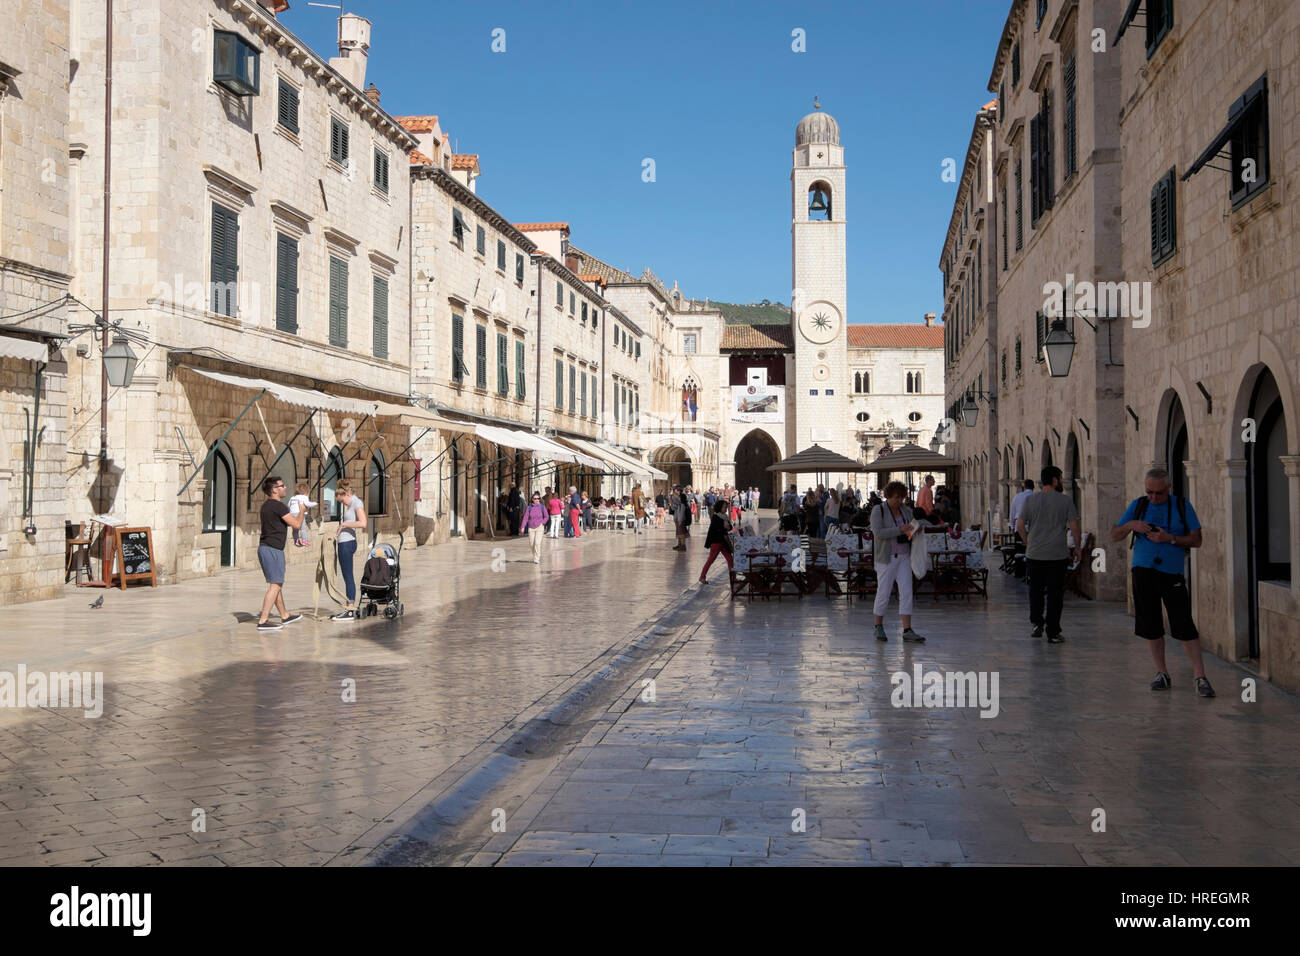 Der Glockenturm, Luza Square, Stradun (Placa), Dubrovnik, Kroatien. Stockfoto